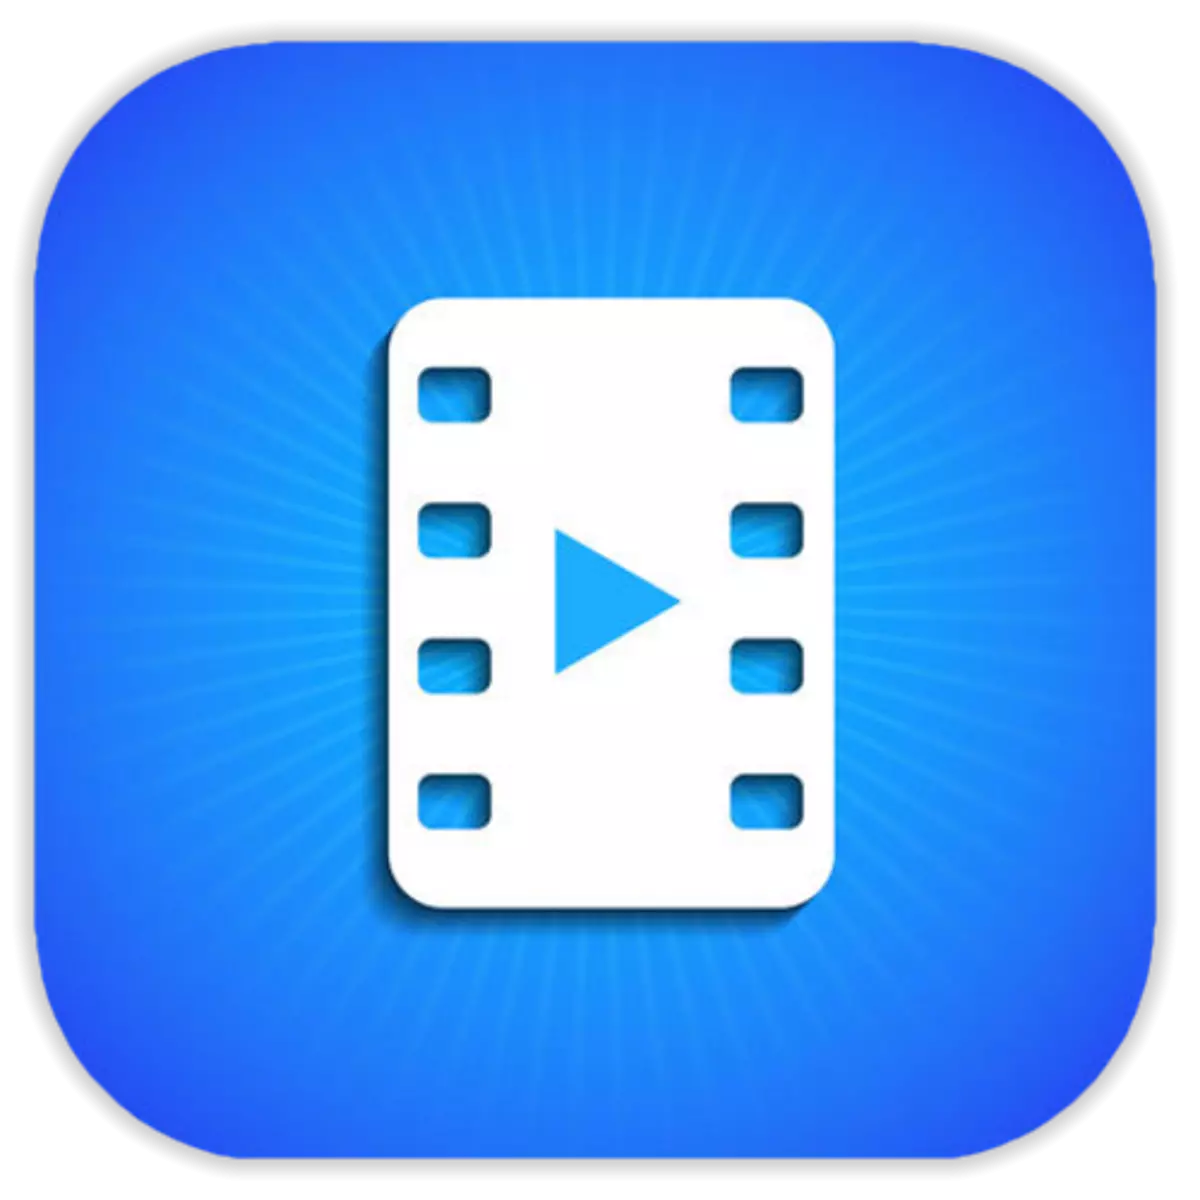 Video spueren Pro 360 Vu WiFi - download Video aus VKontakte zu iPhone